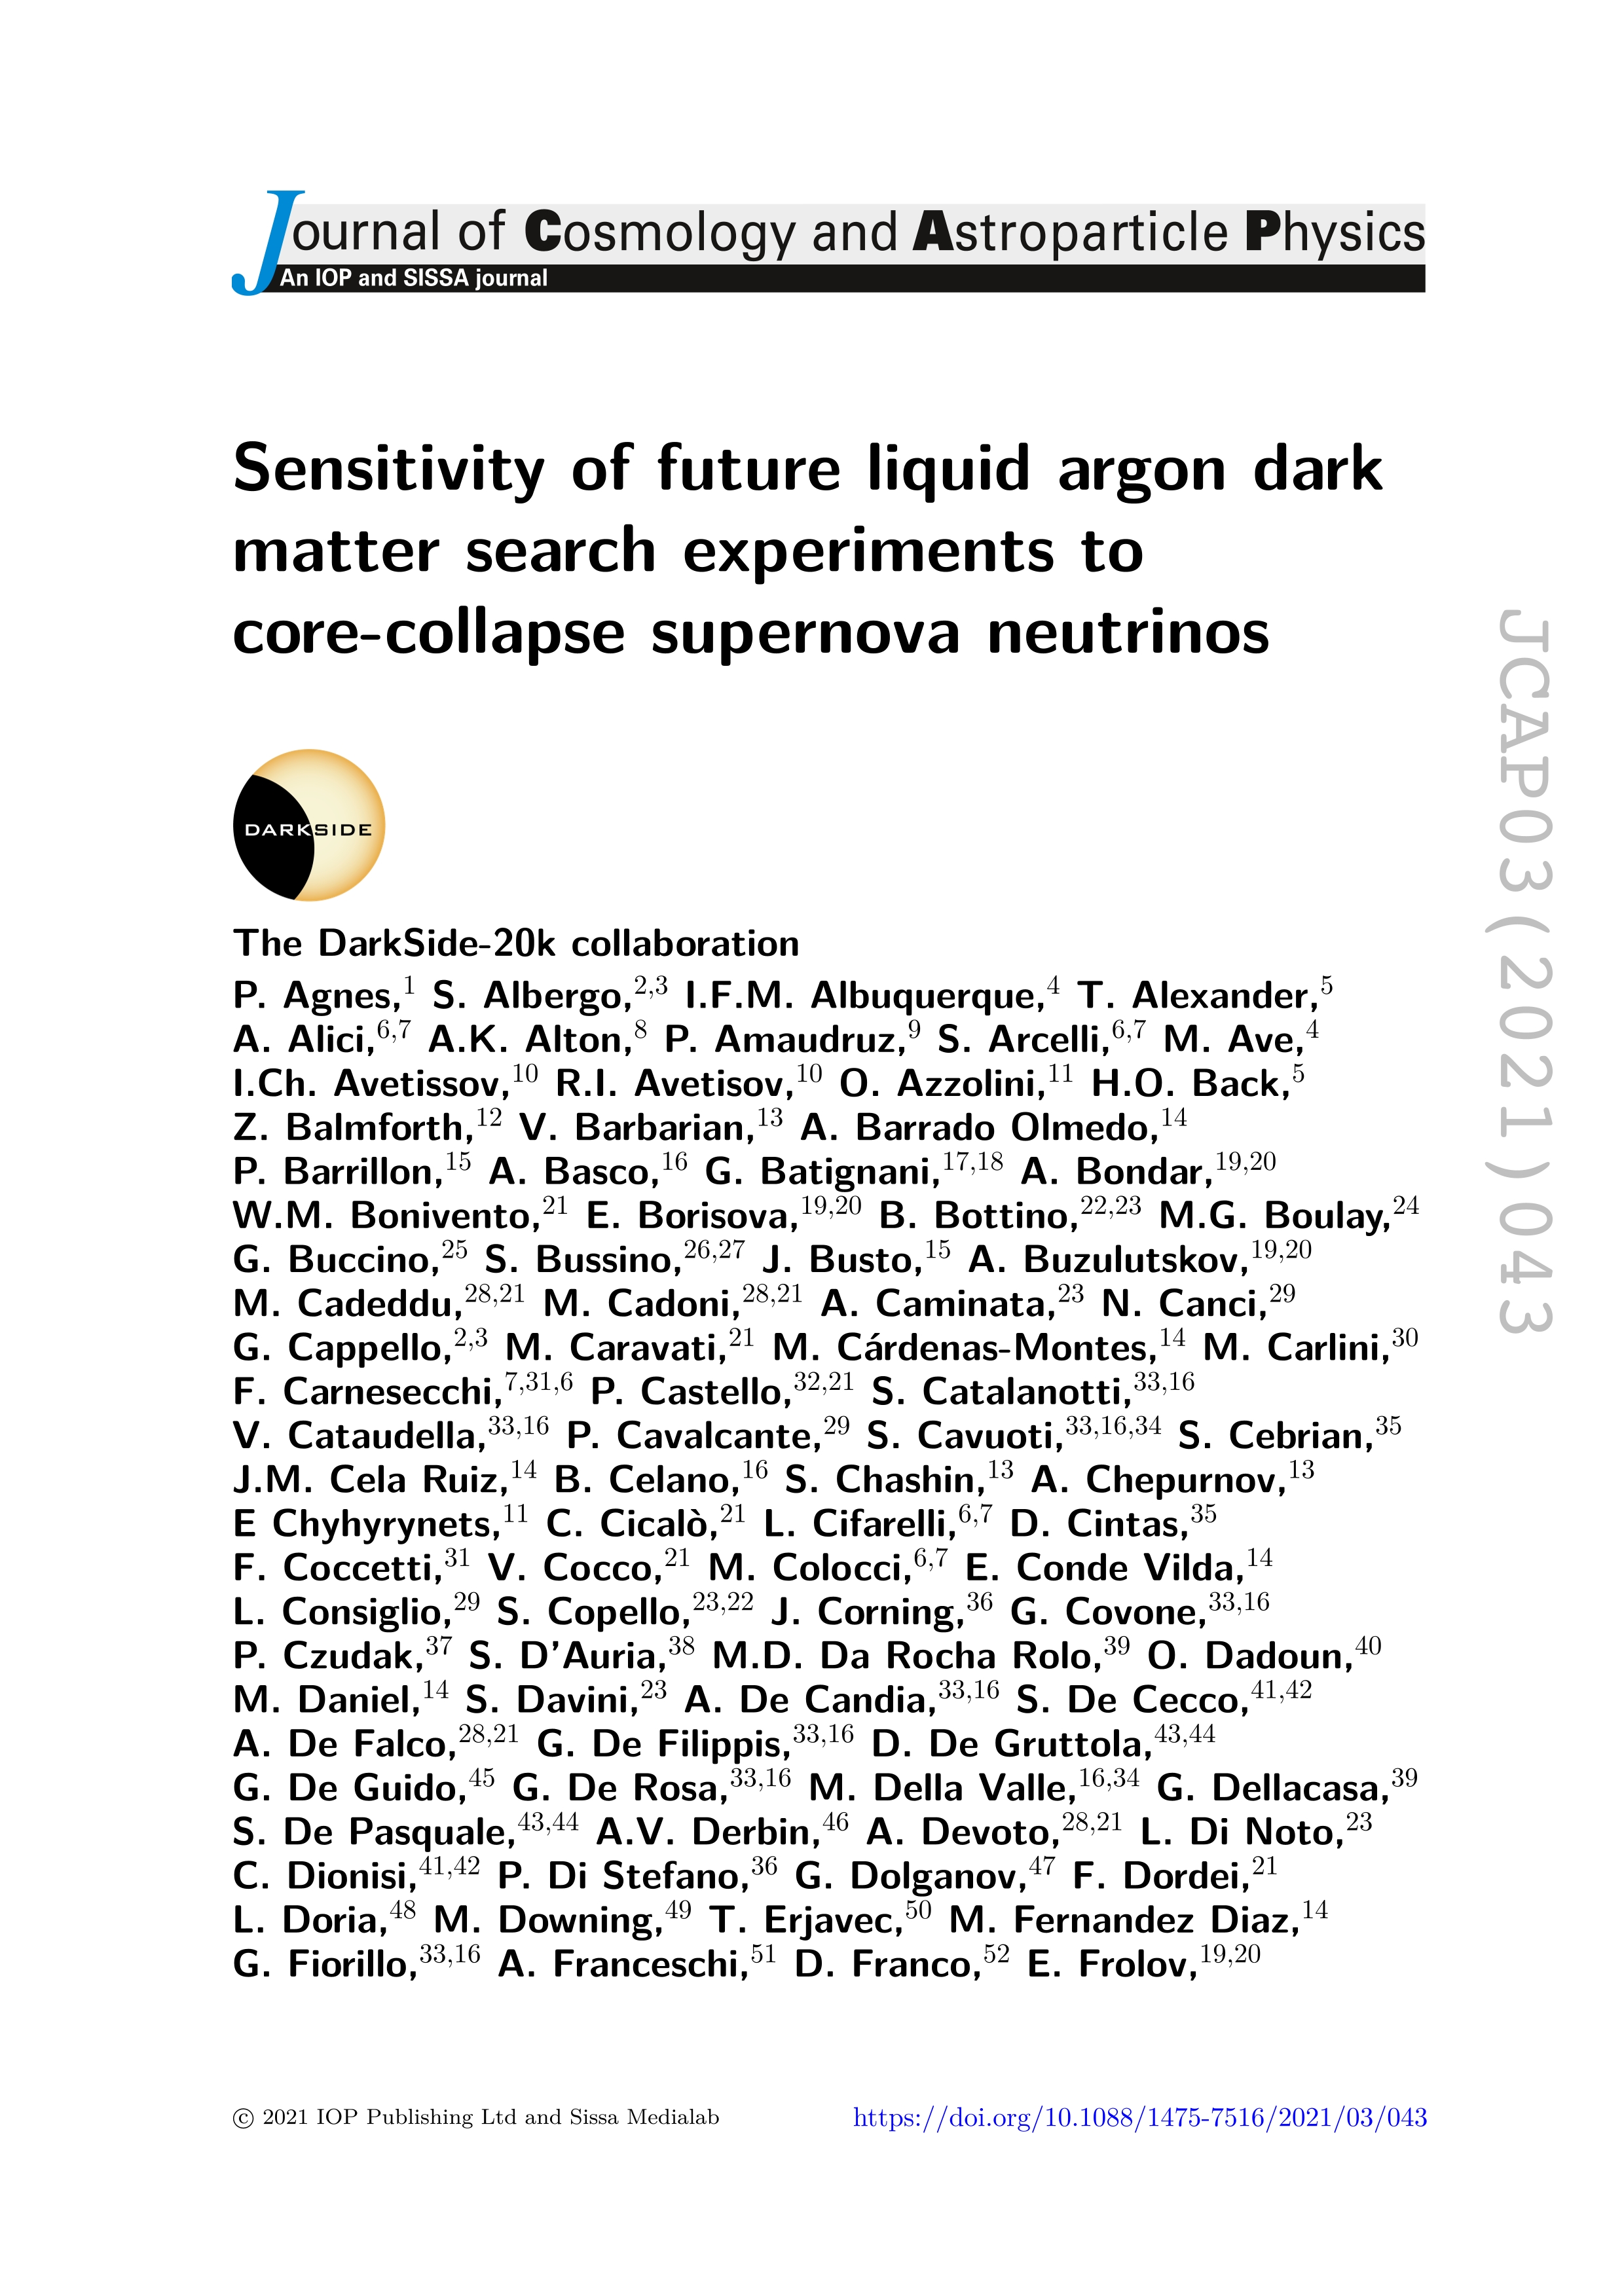 Sensitivity of  future  liquid argon dark matter search experiments to core-collapse supernova neutrinos